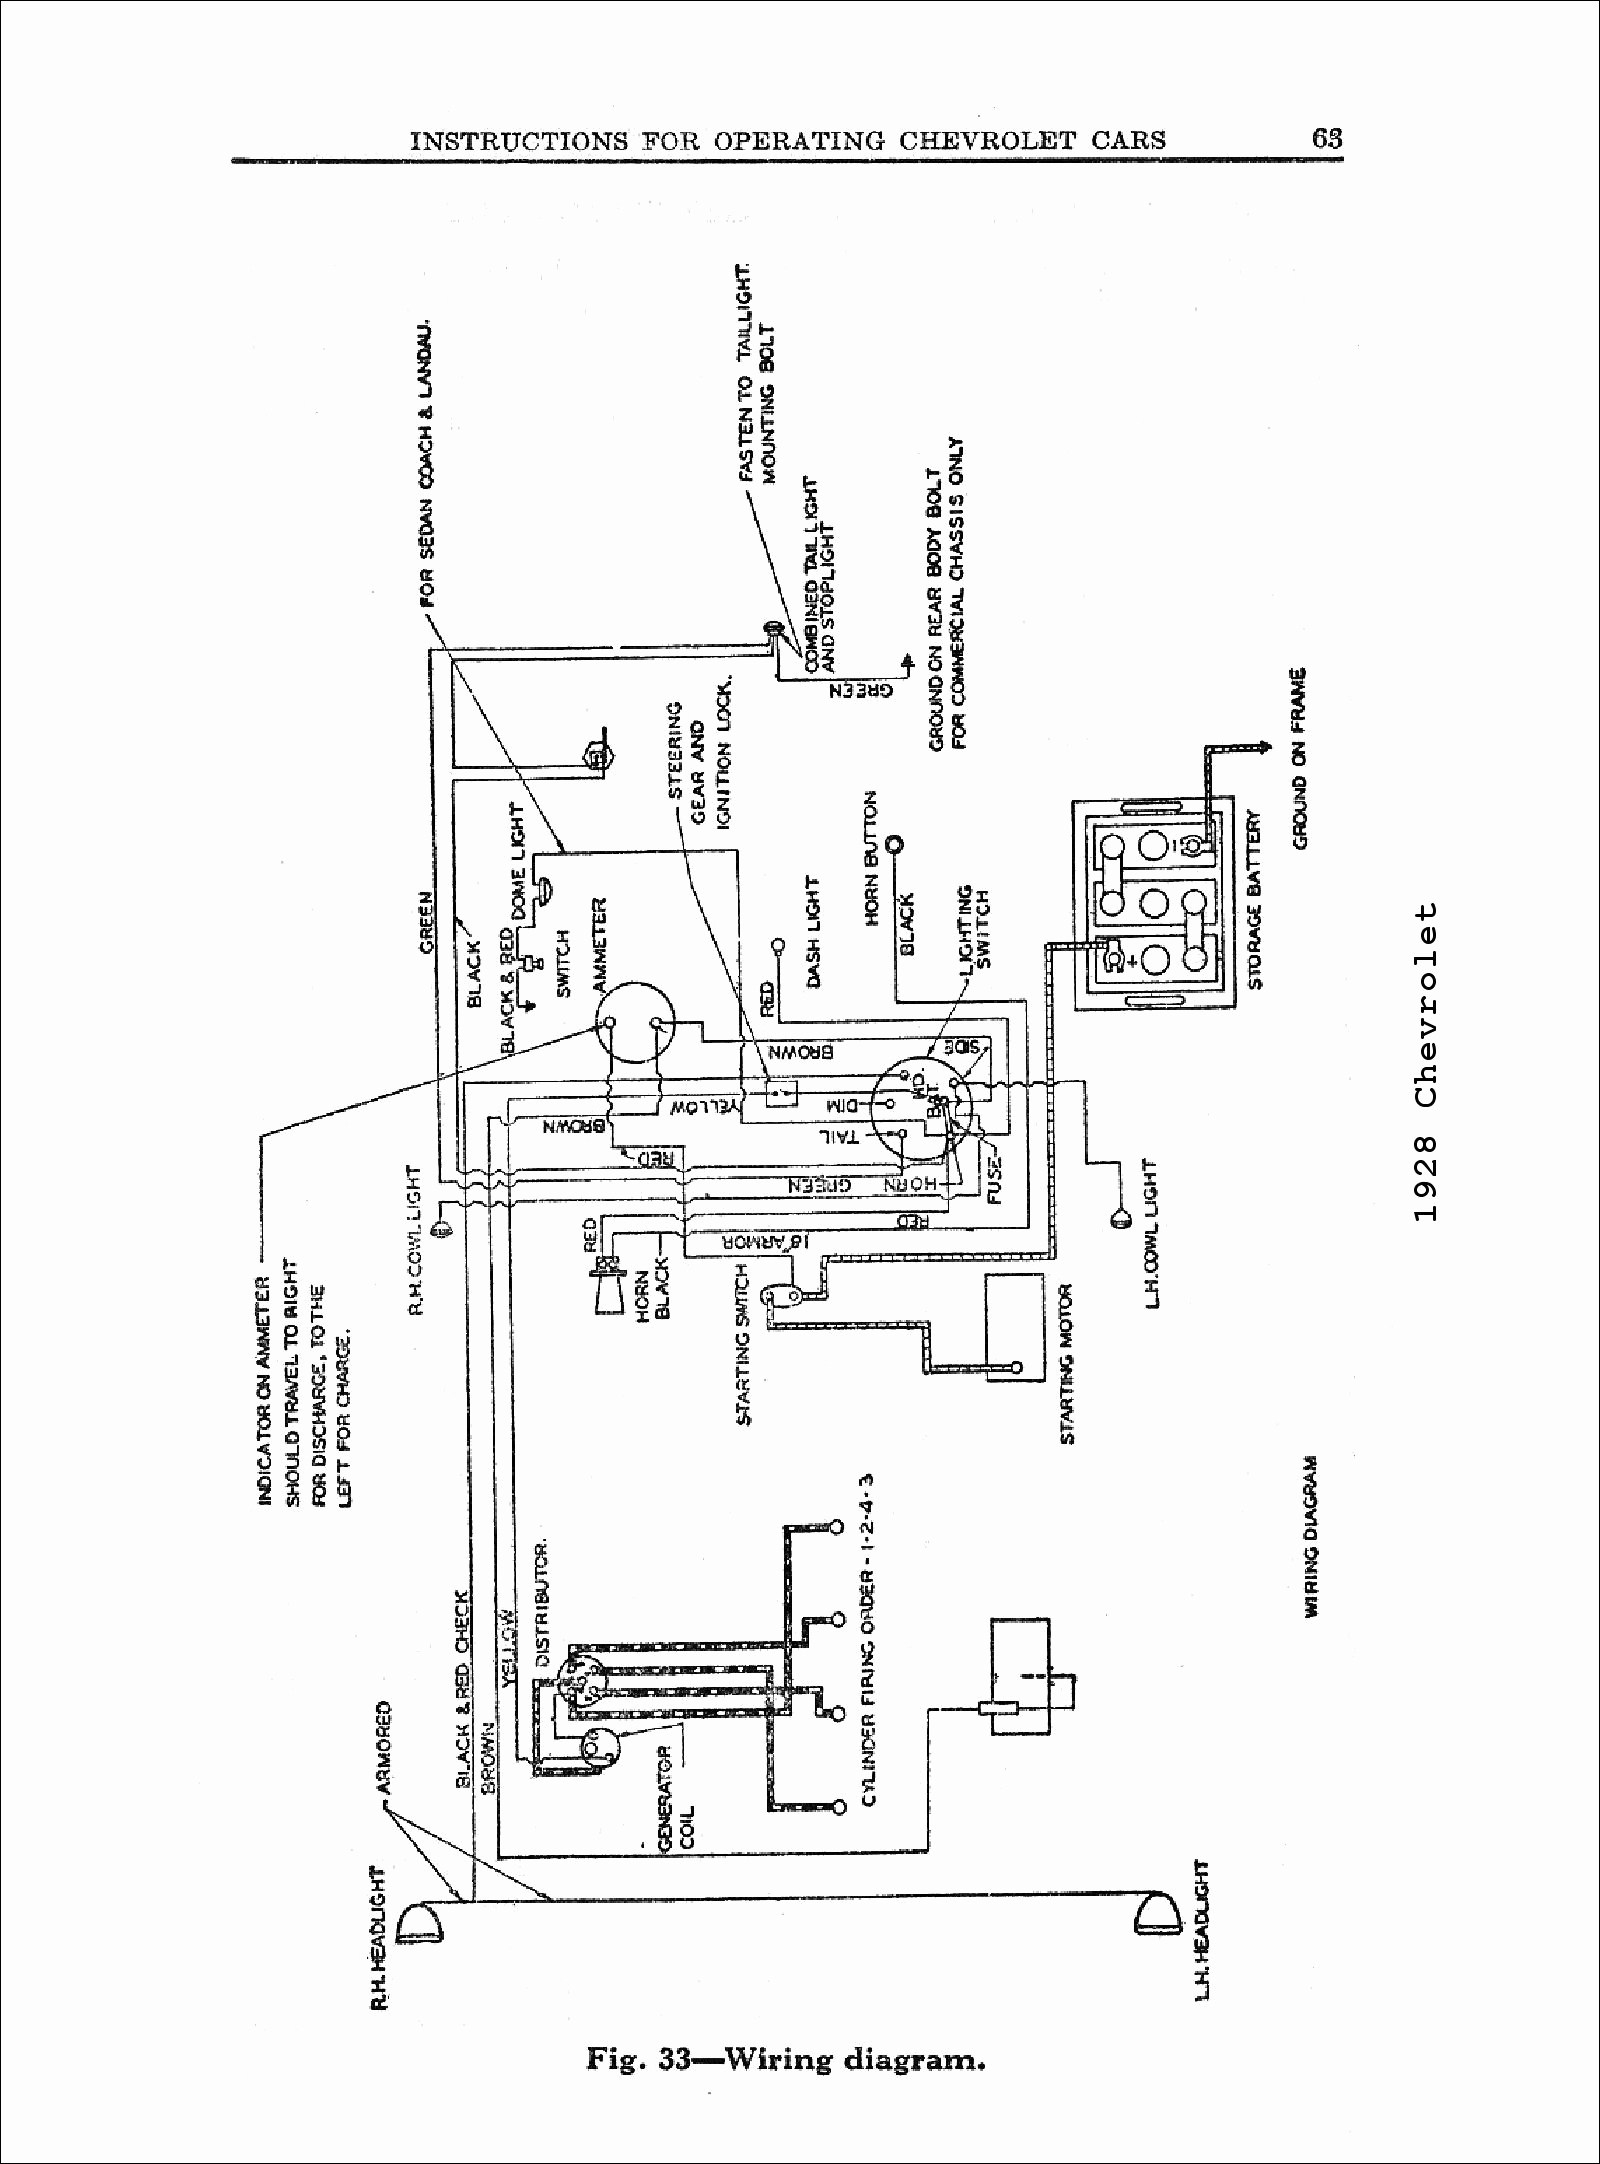 1980 Chevy Truck Wiring Diagram from annawiringdiagram.com